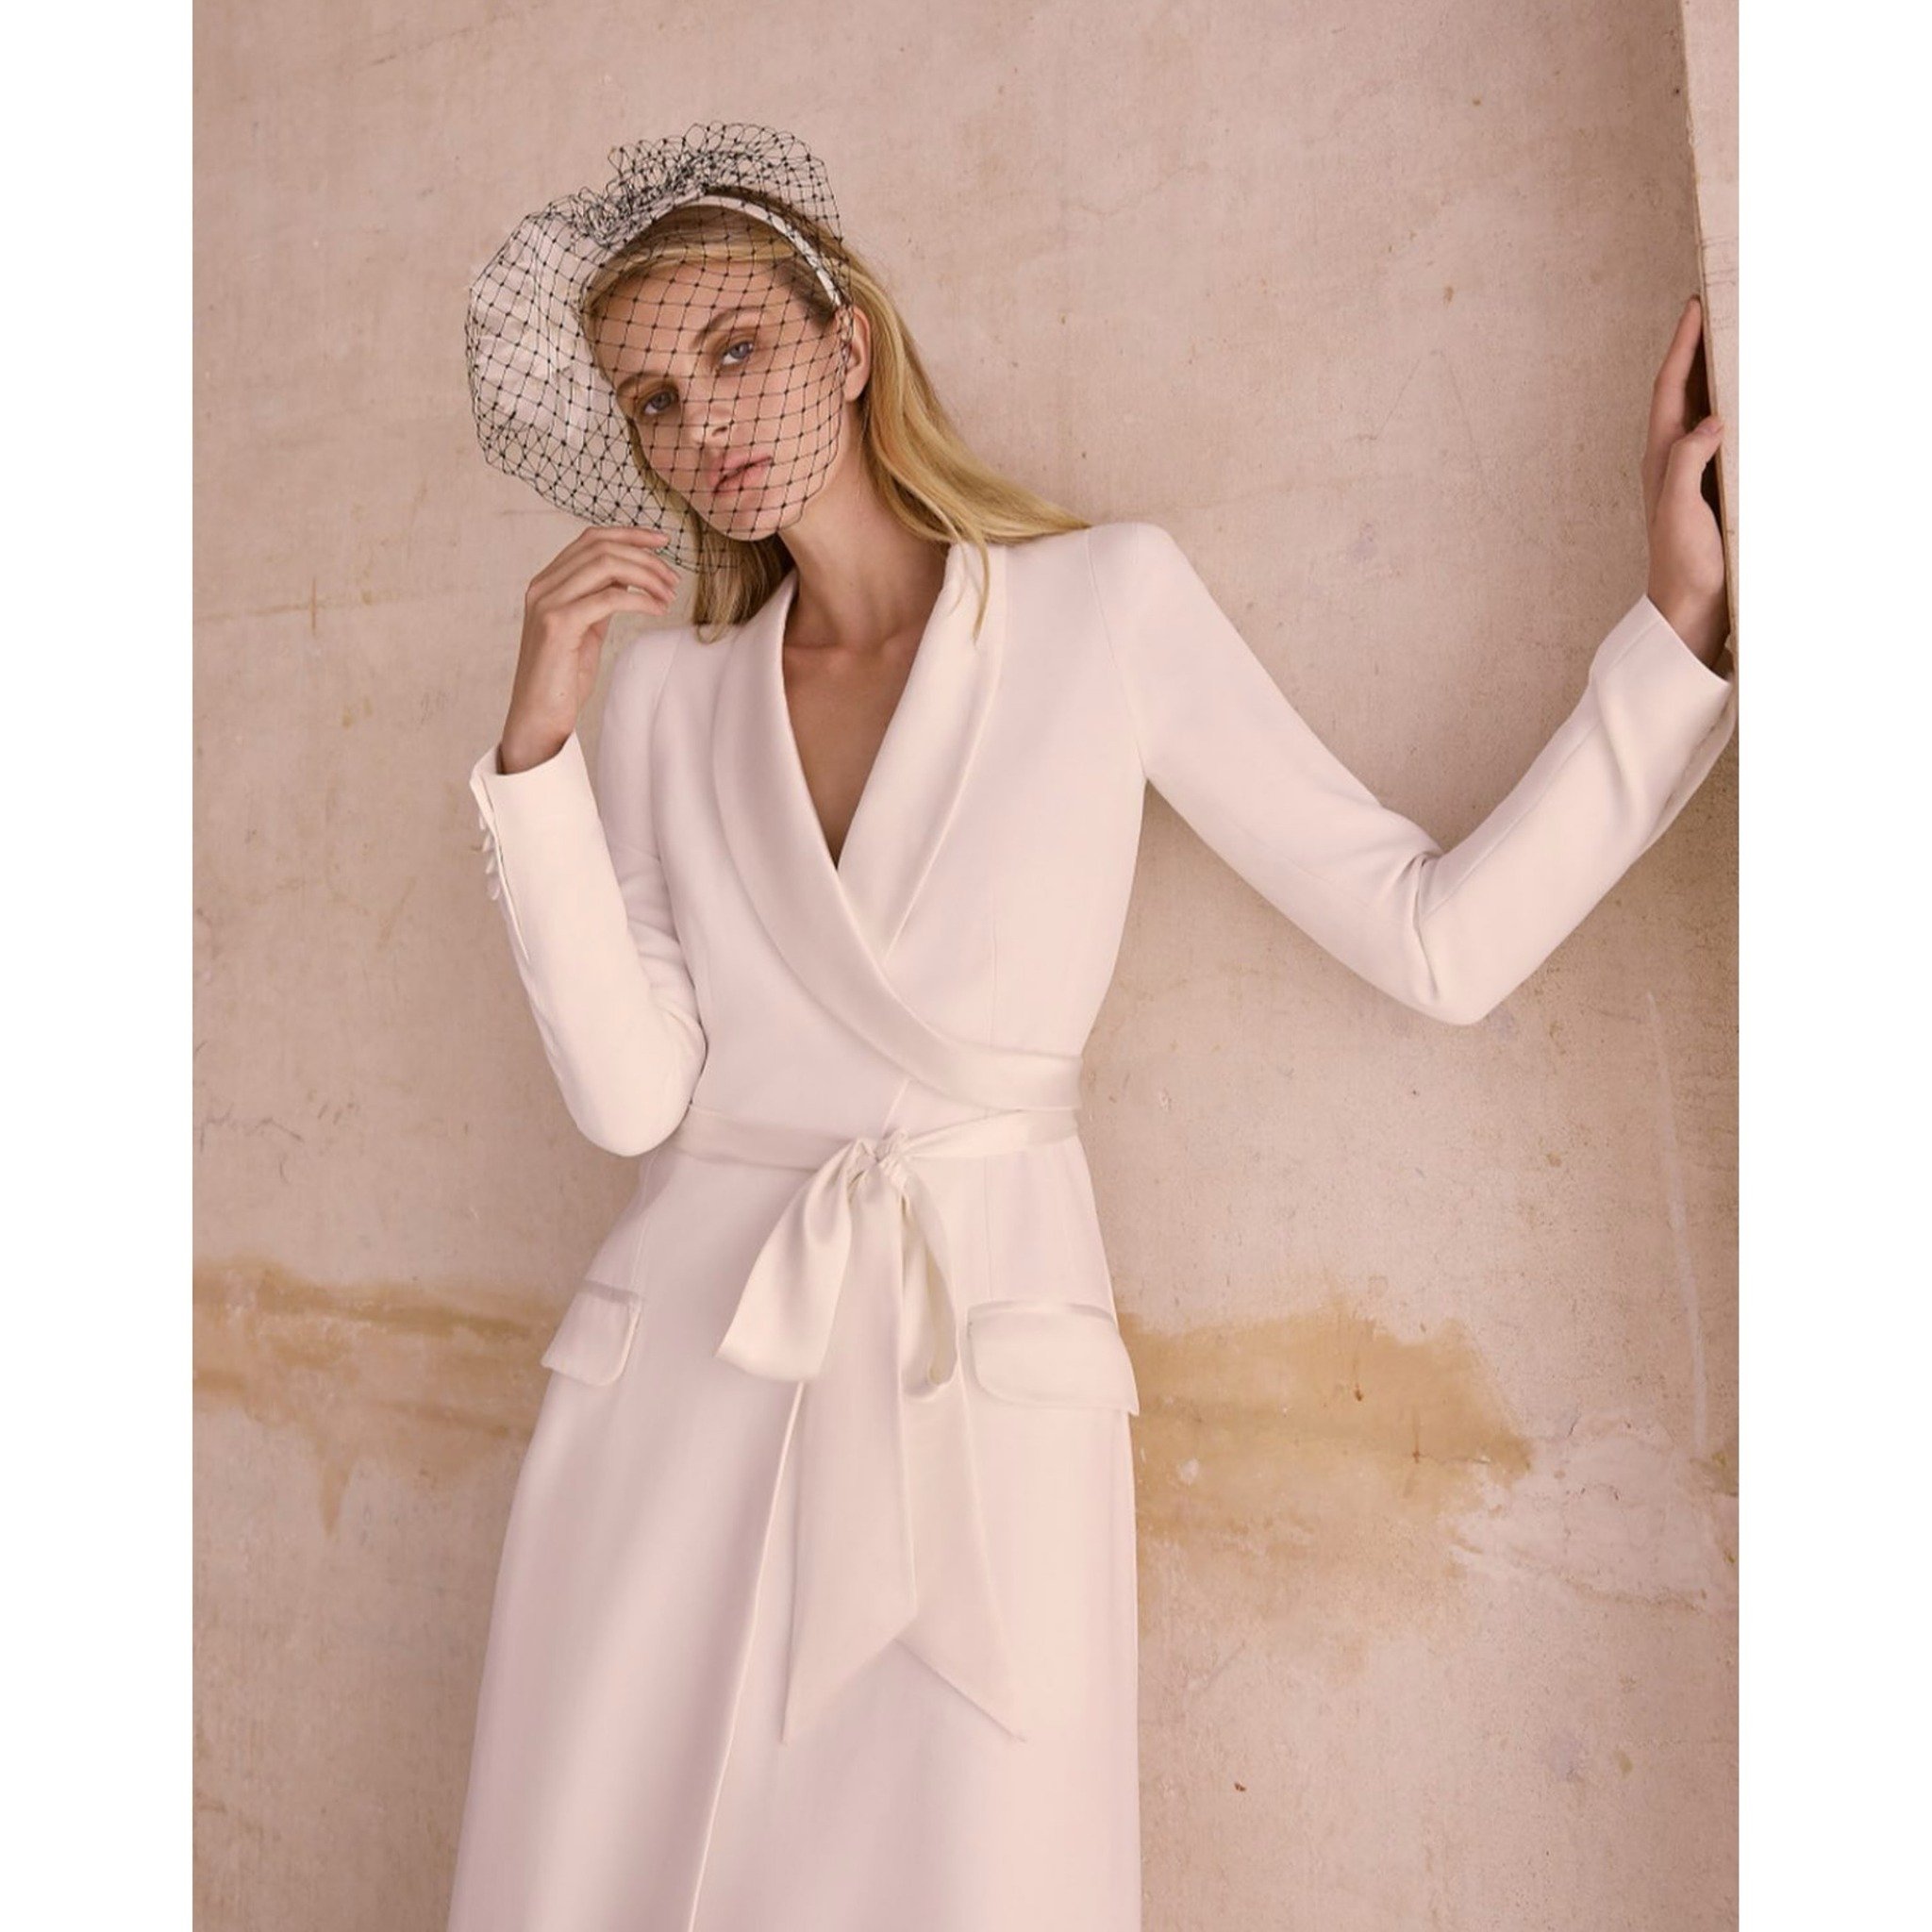 ▫️The iconic Garance dress by @temperleybridal▫️Luxurious crepe, silk satin shawl collar and a soft satin sash 🤍
.
.
.
.
.
#temperleybridal #iconicbride #2024wedding #temperley #winterwedding #civilweddingdress #londonbridetobe #citywedding #modernb